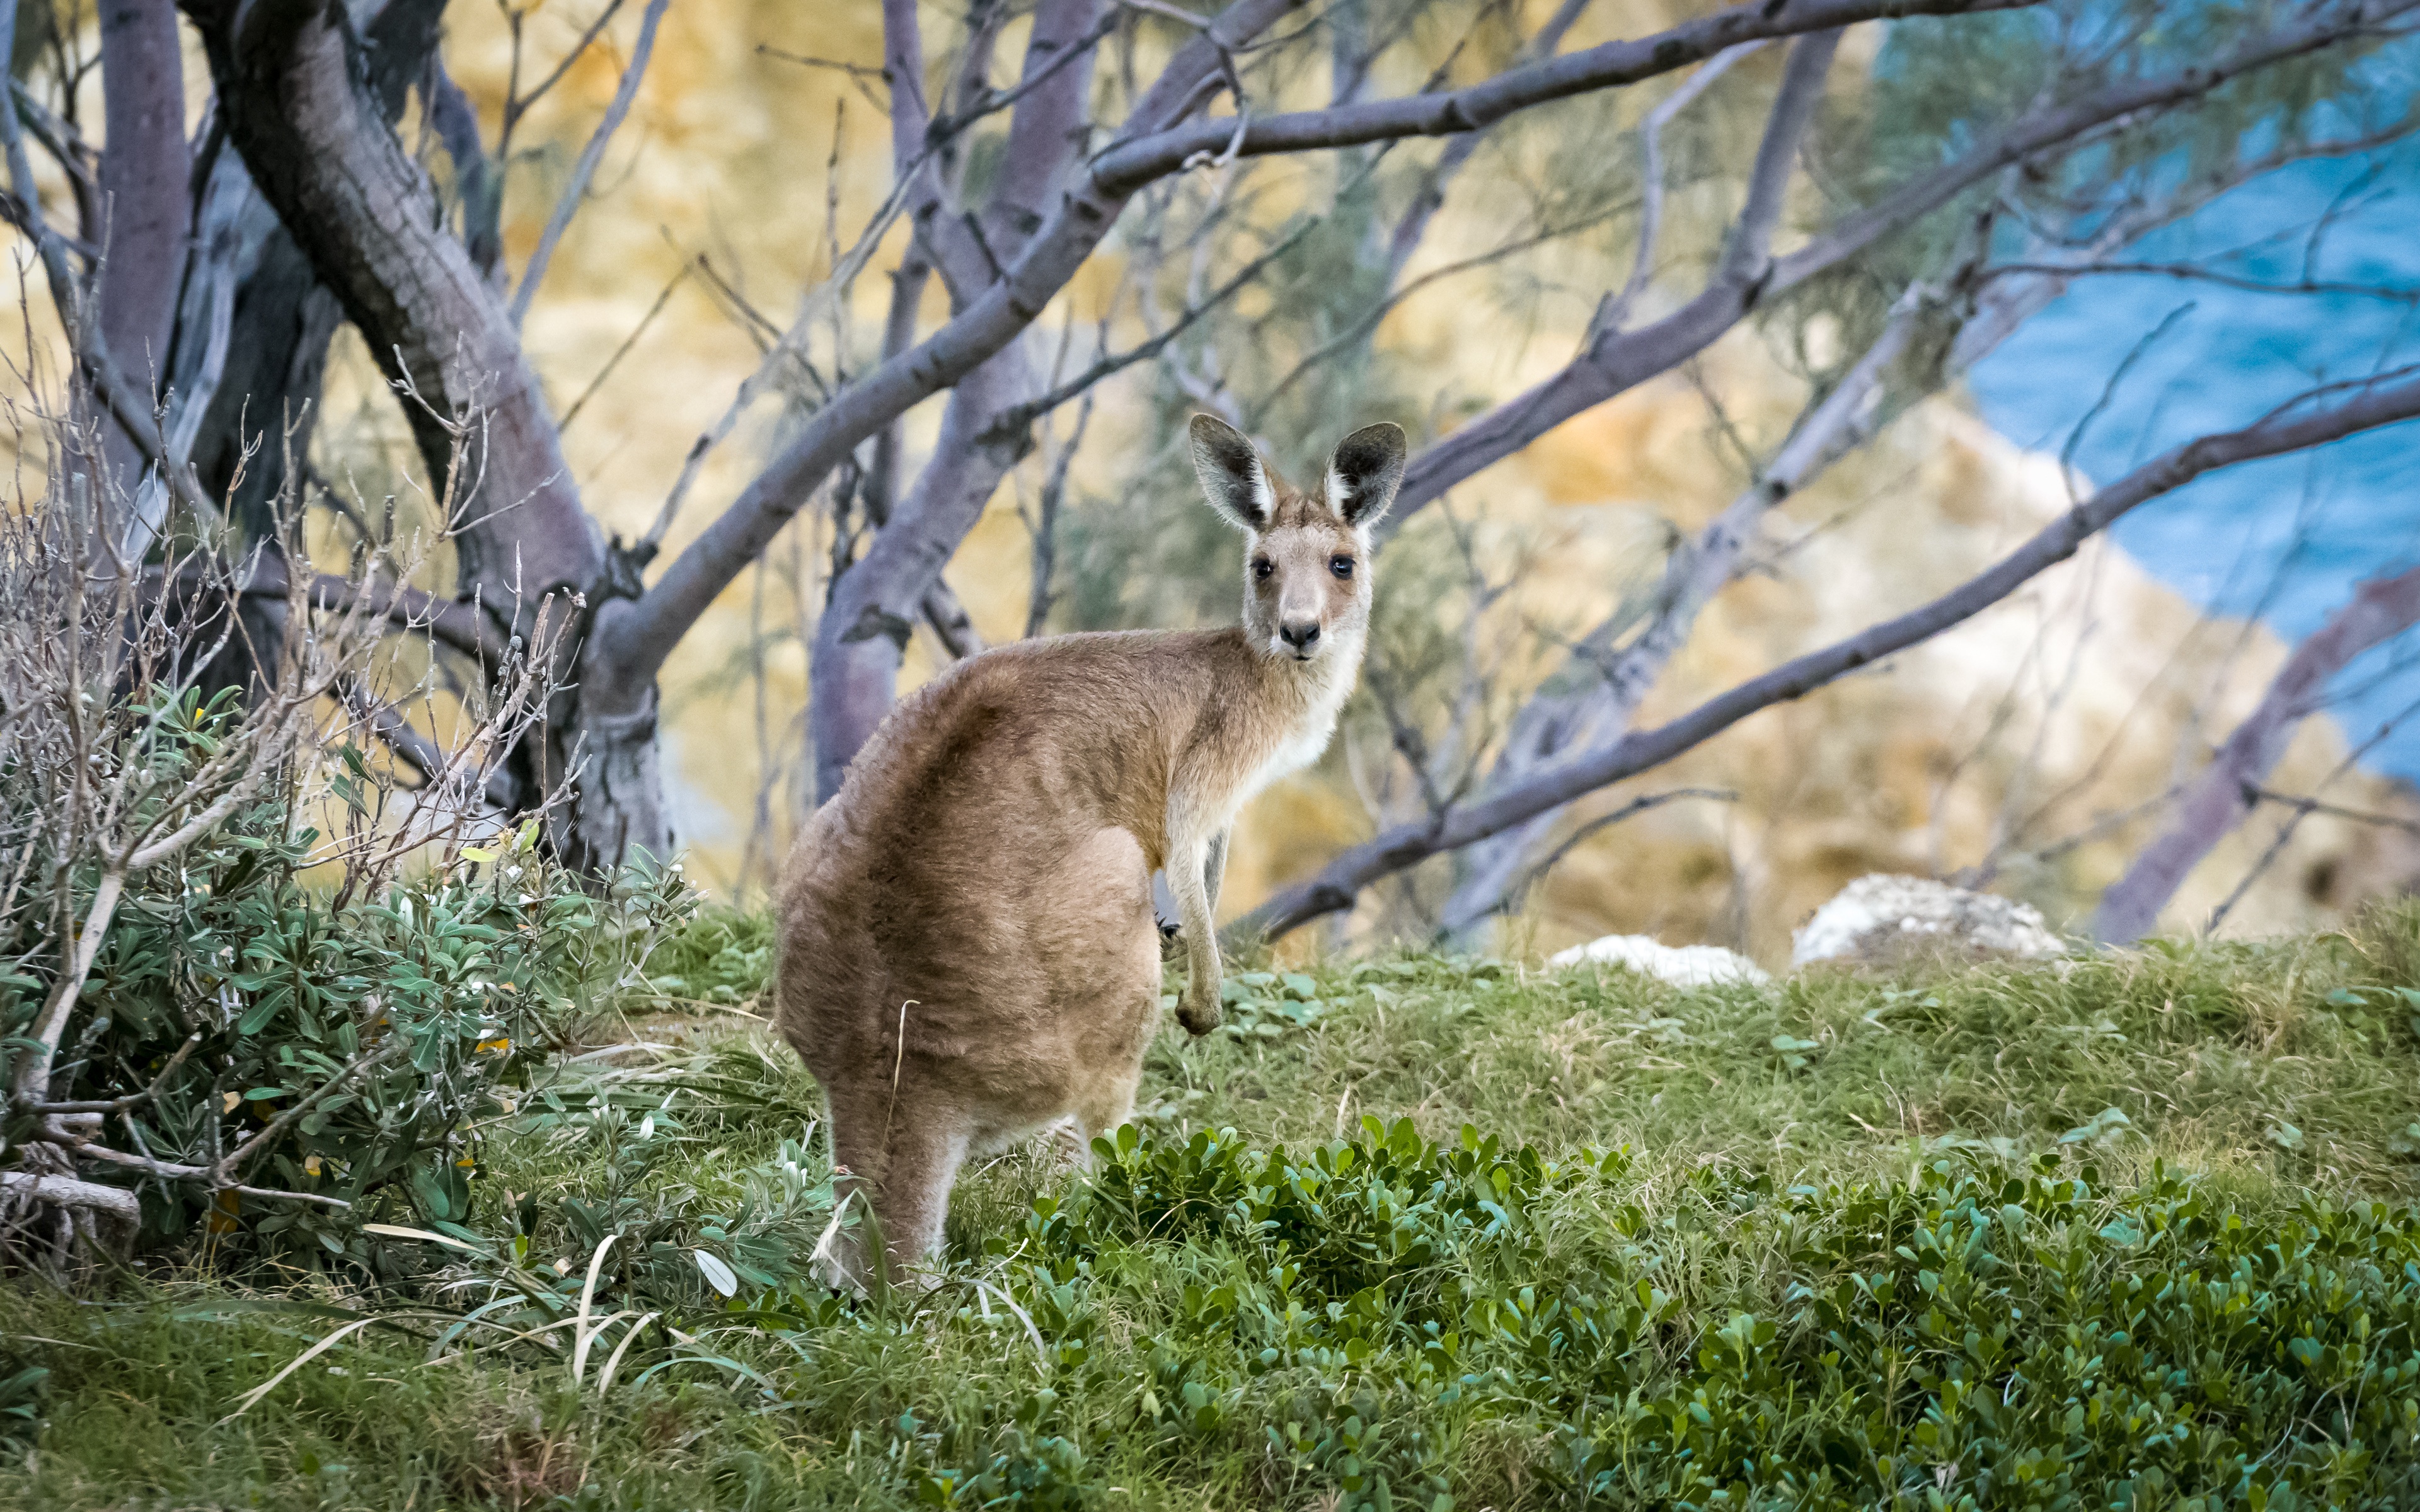 The kangaroo looks back